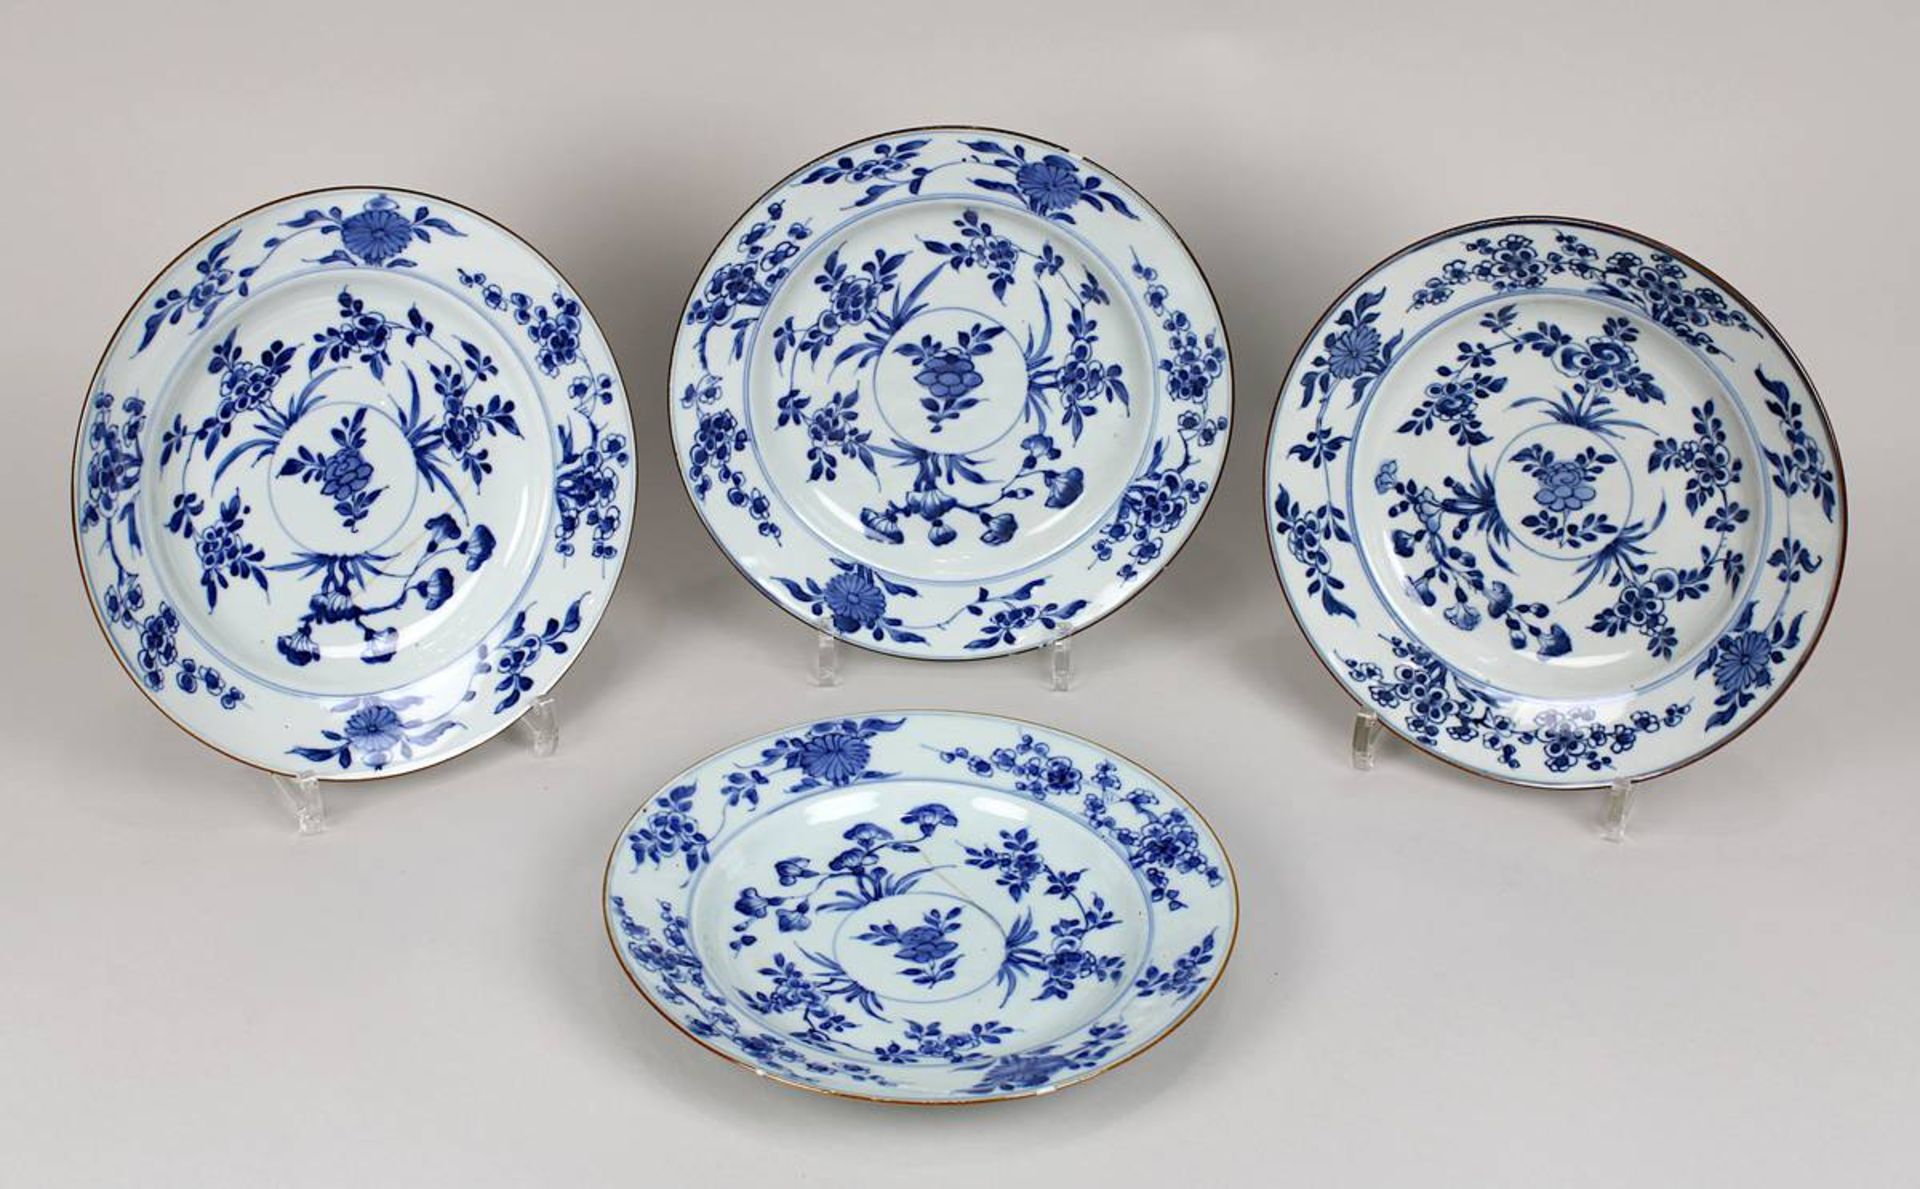 4 Teller aus Porzellan, China, Kangxi-Periode (1654-1722), Porzellan blaugrauer Scherben